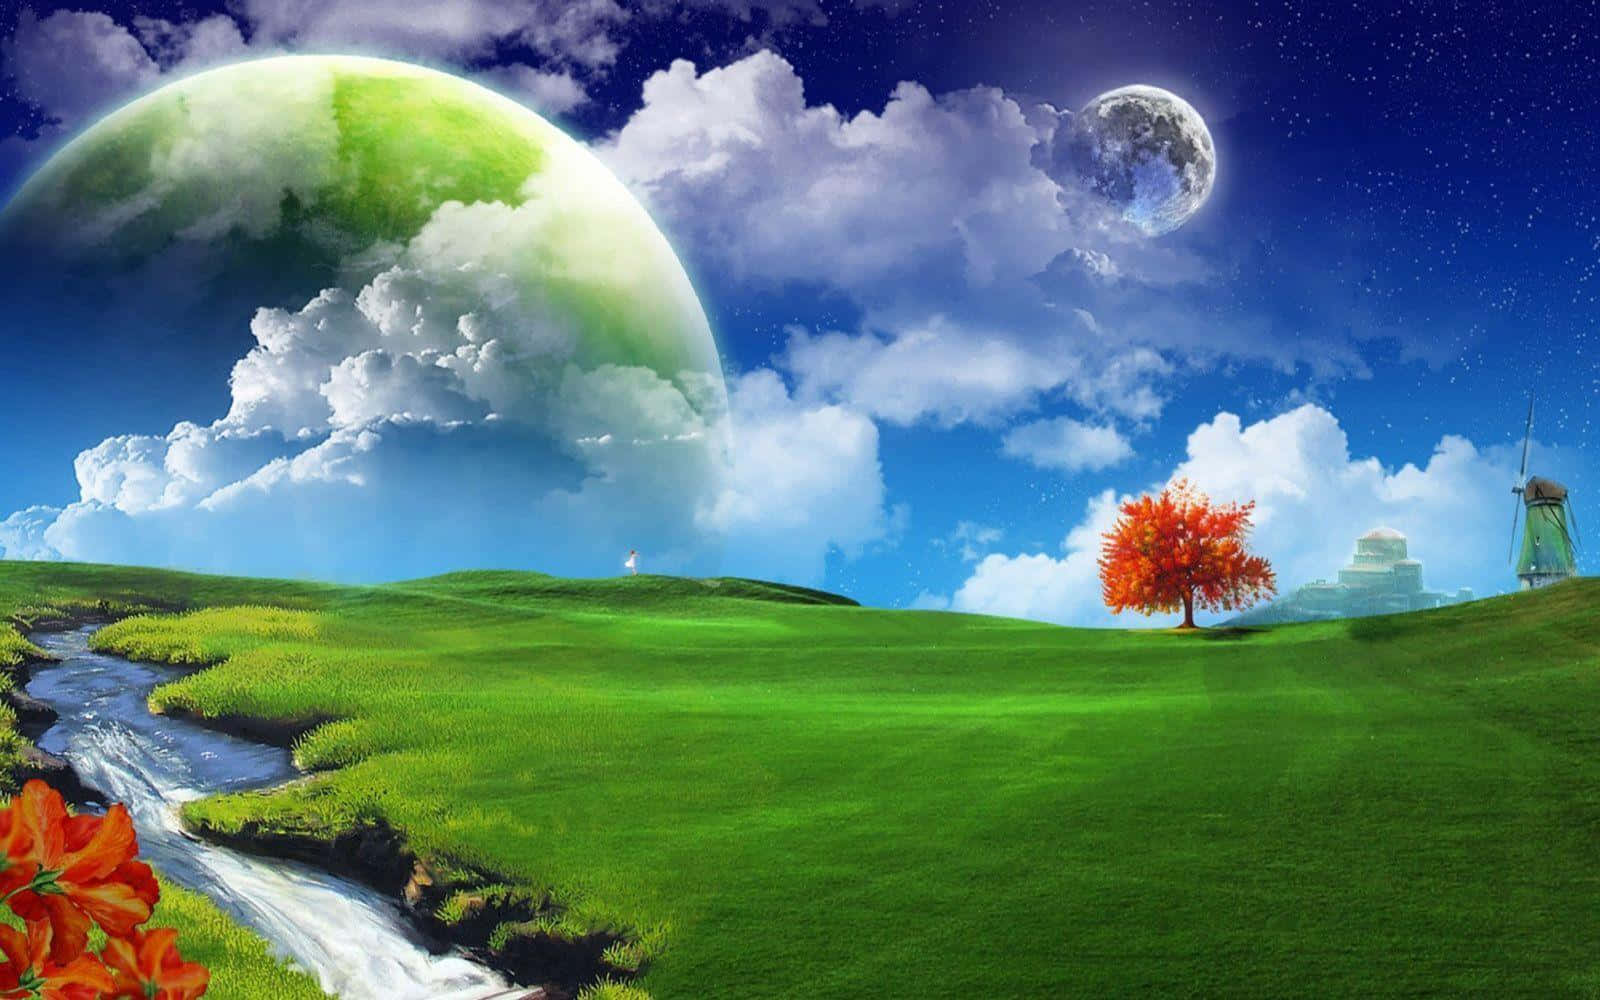 Verdant Fantasy Landscape With Planets.jpg Wallpaper